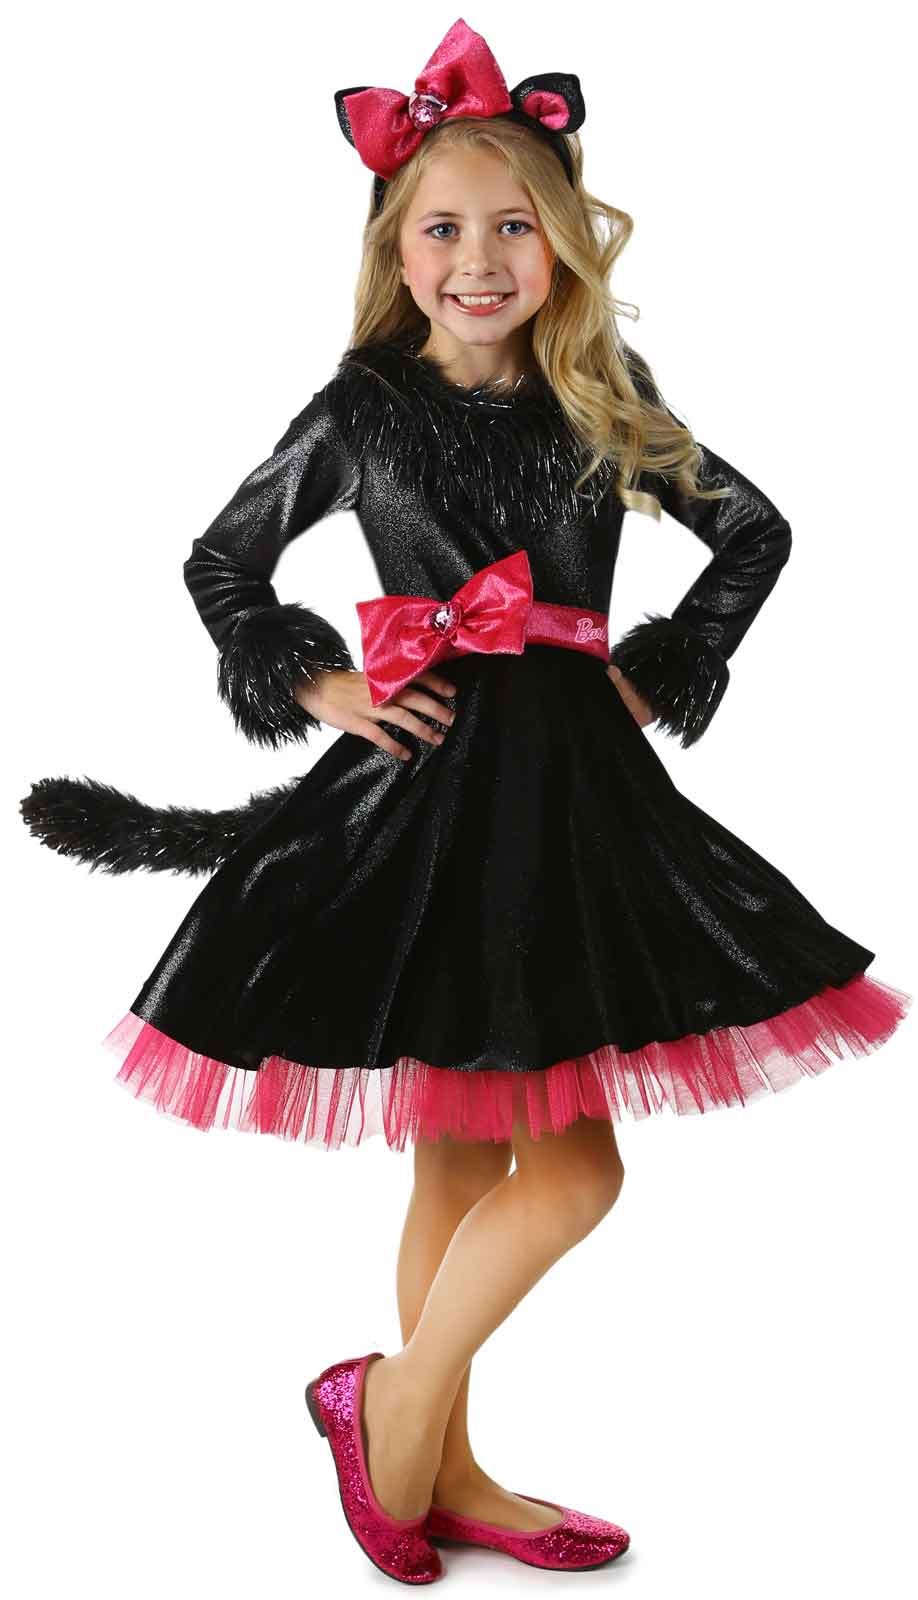 Deluxe Barbie Kitty Costume